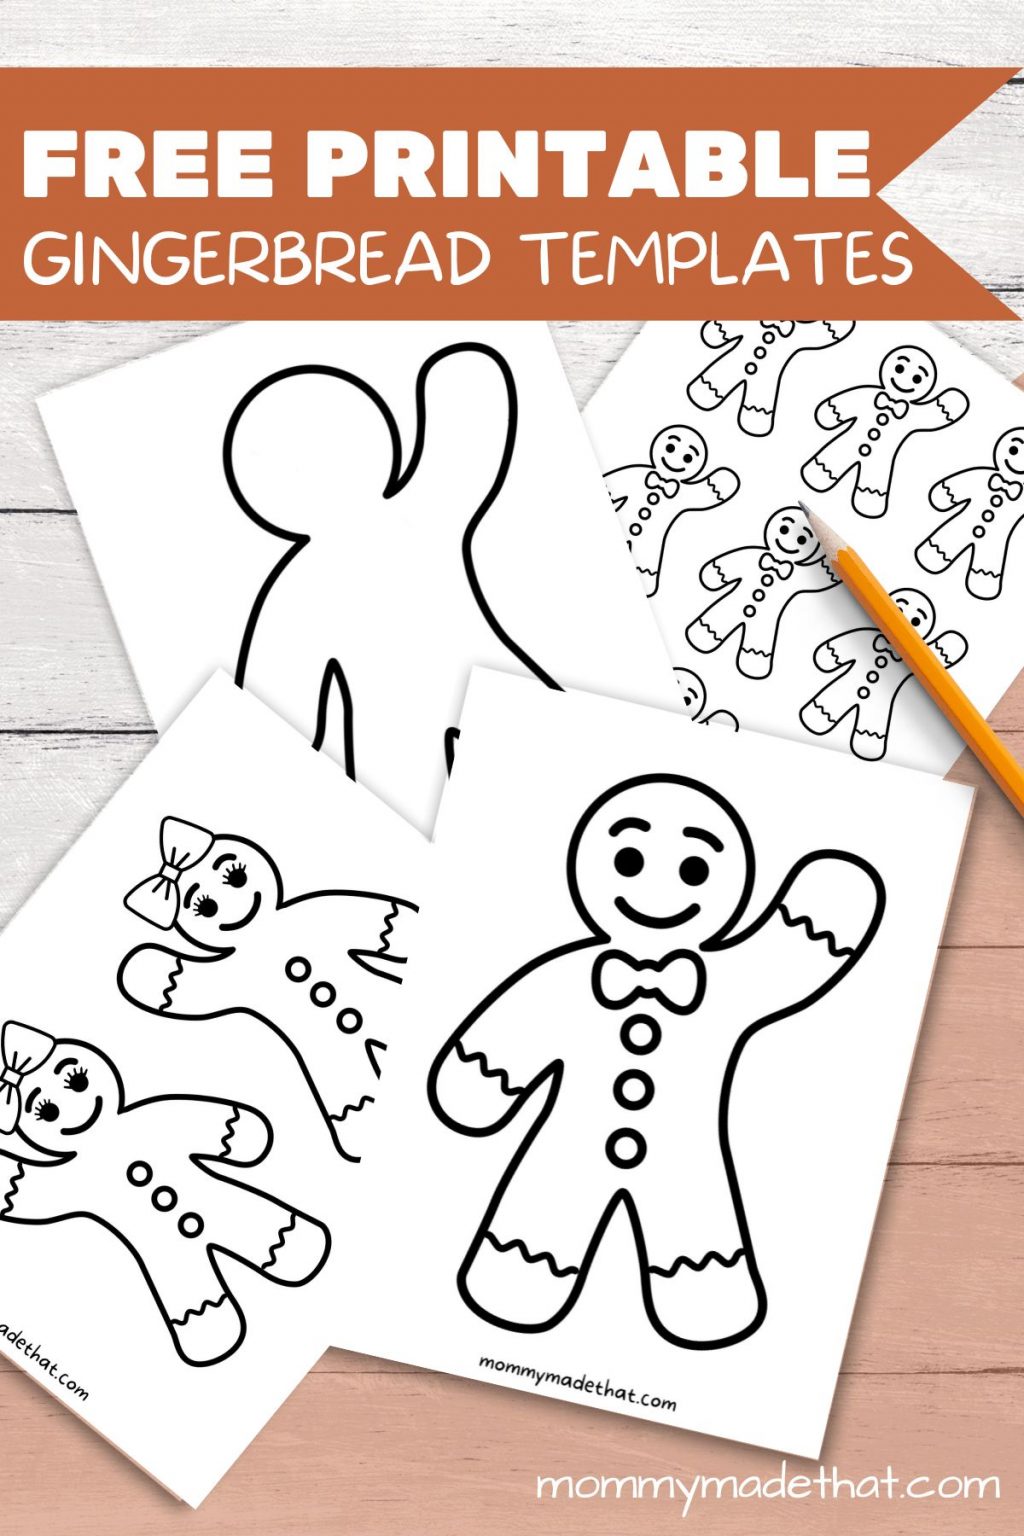 Gingerbread printable templates.